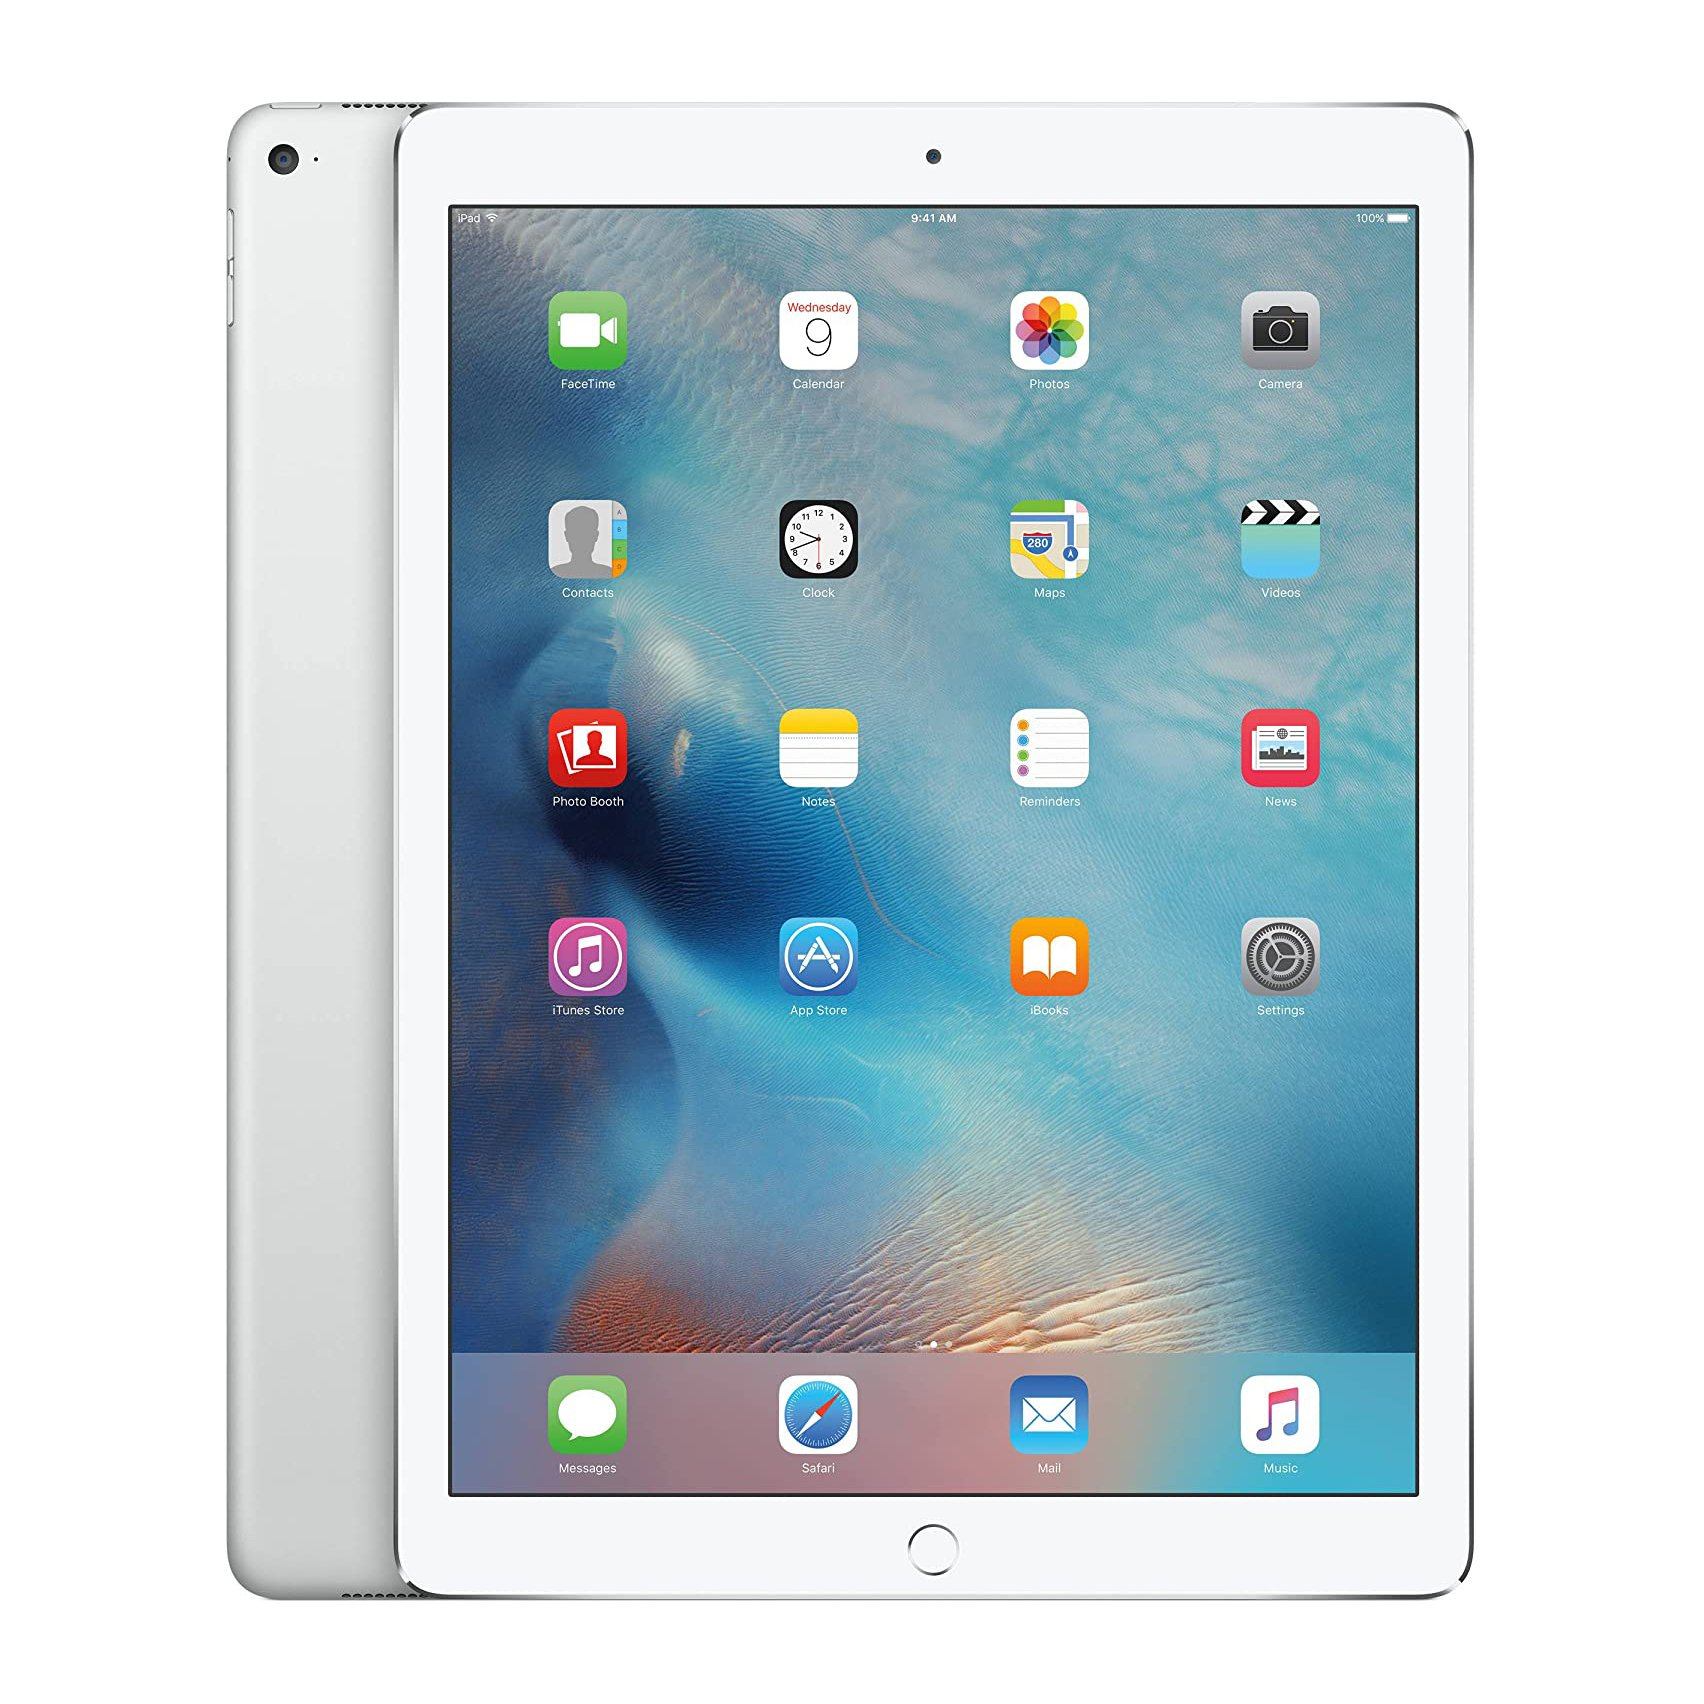 iPad 9.7 air2 32GB wifiモデル シルバー | heizoel-schoenherr.de